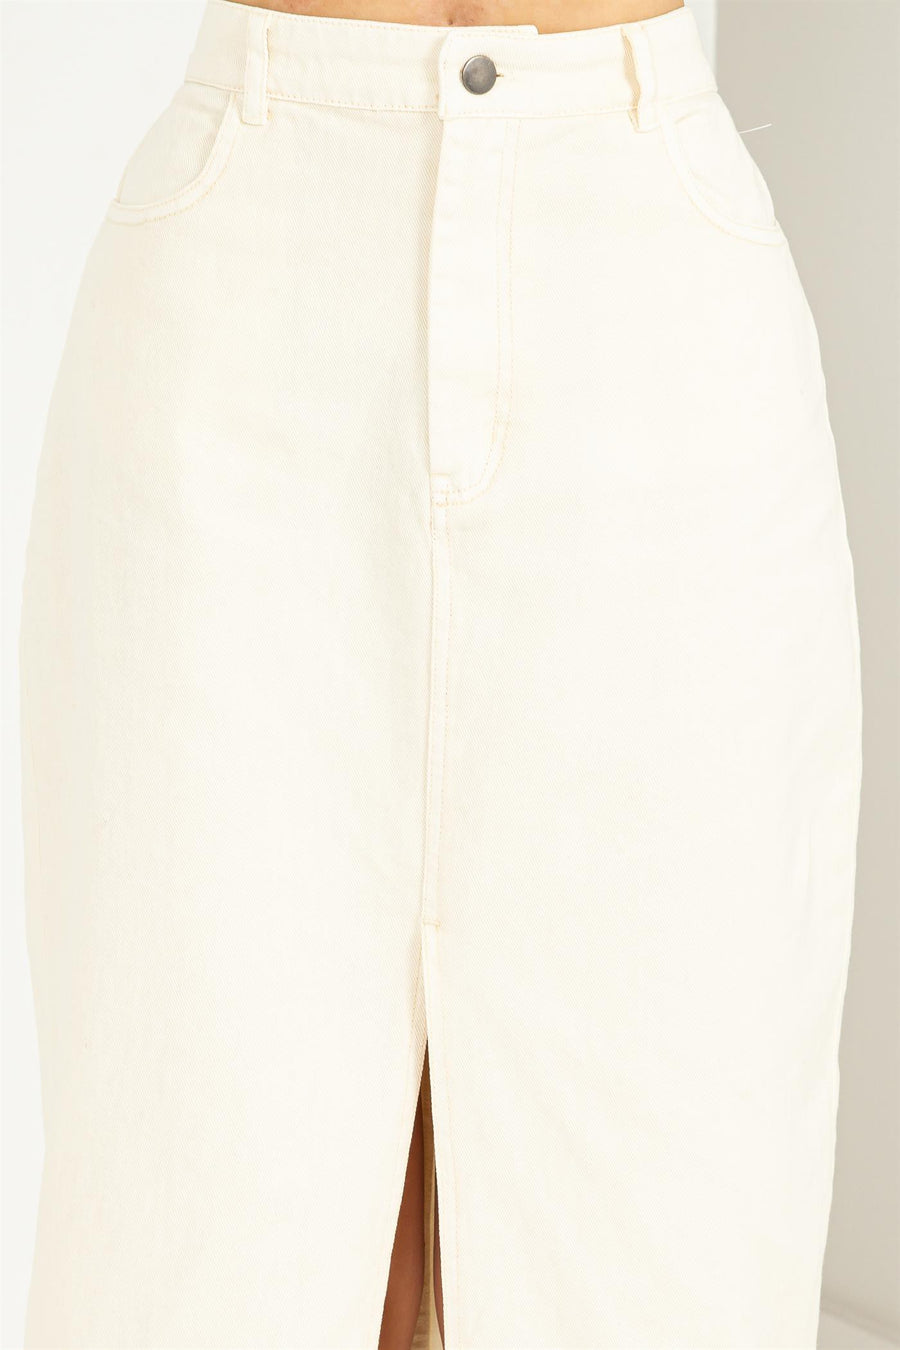 Cream midi skirt with slit.